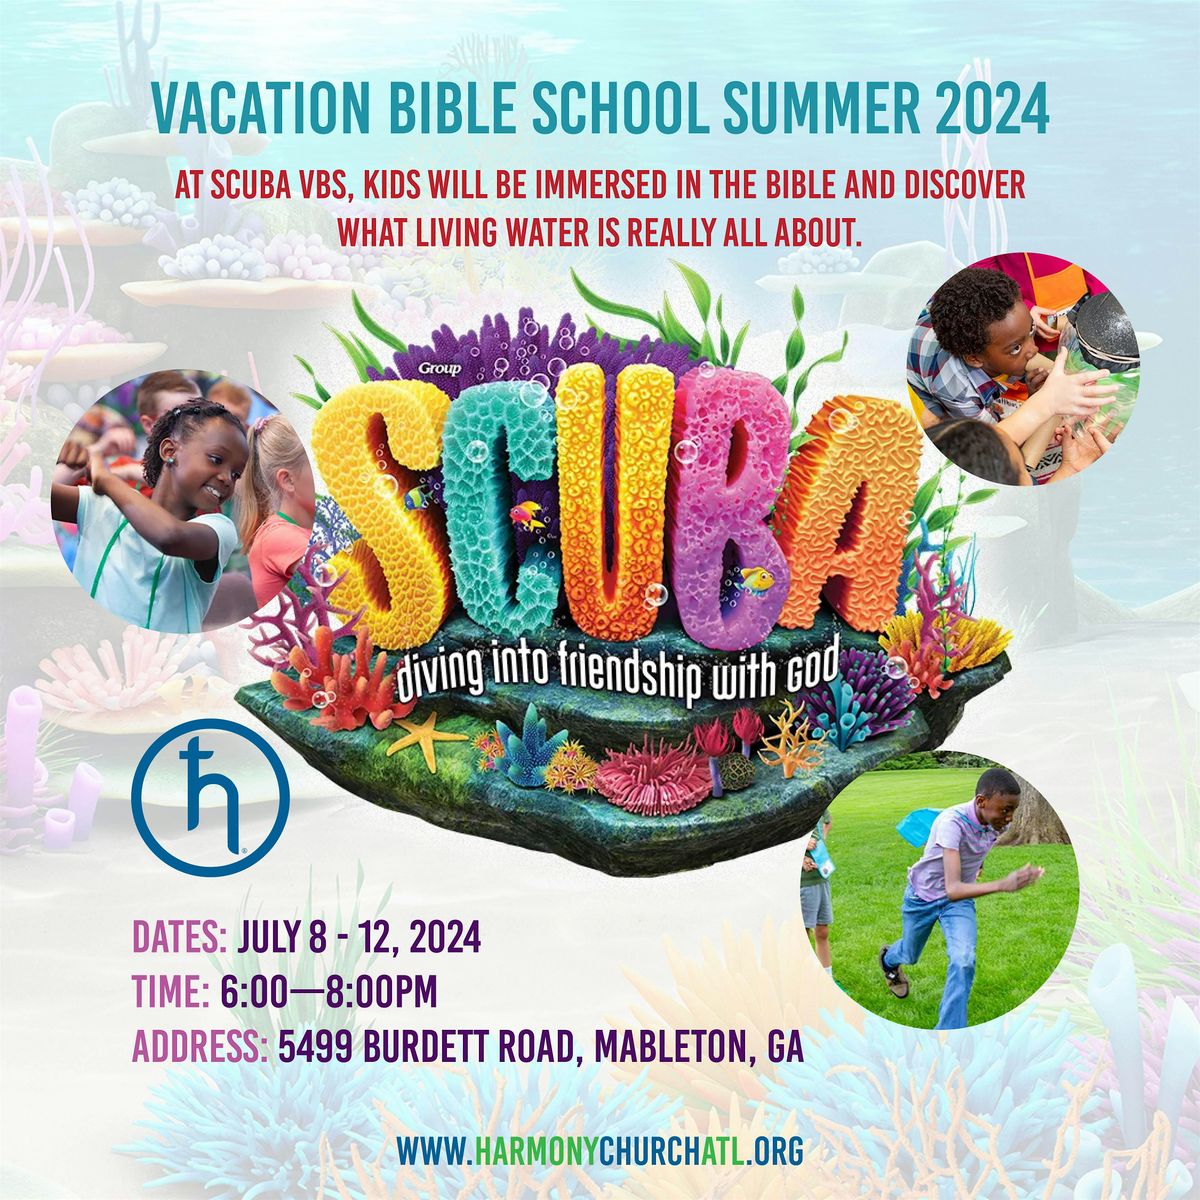 Scuba VBS Presented by Harmony Church Atlanta